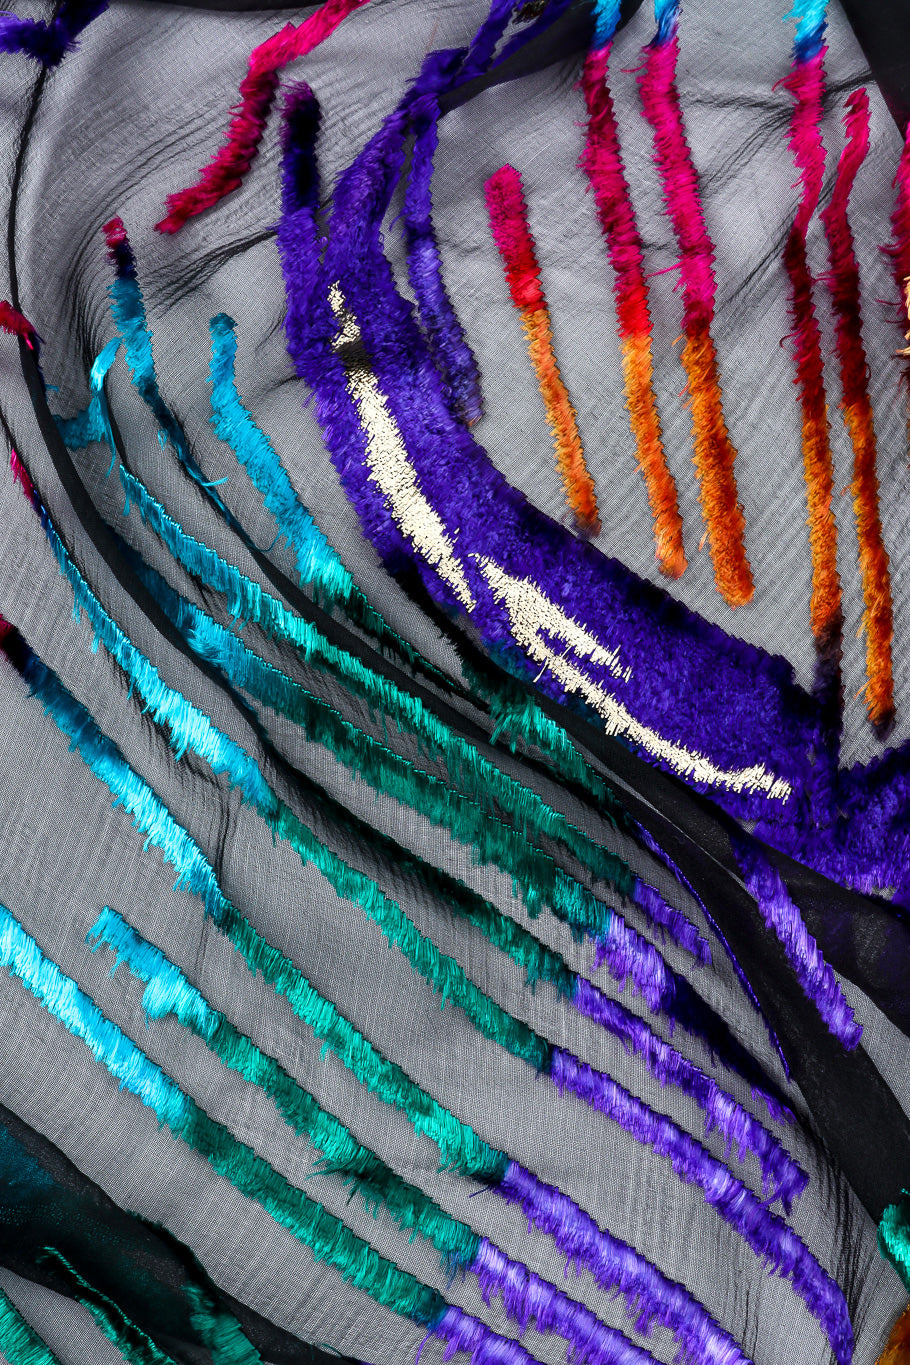 Jewel tone velvet scarf by Paco Rabanne metallic fibers close @recessla